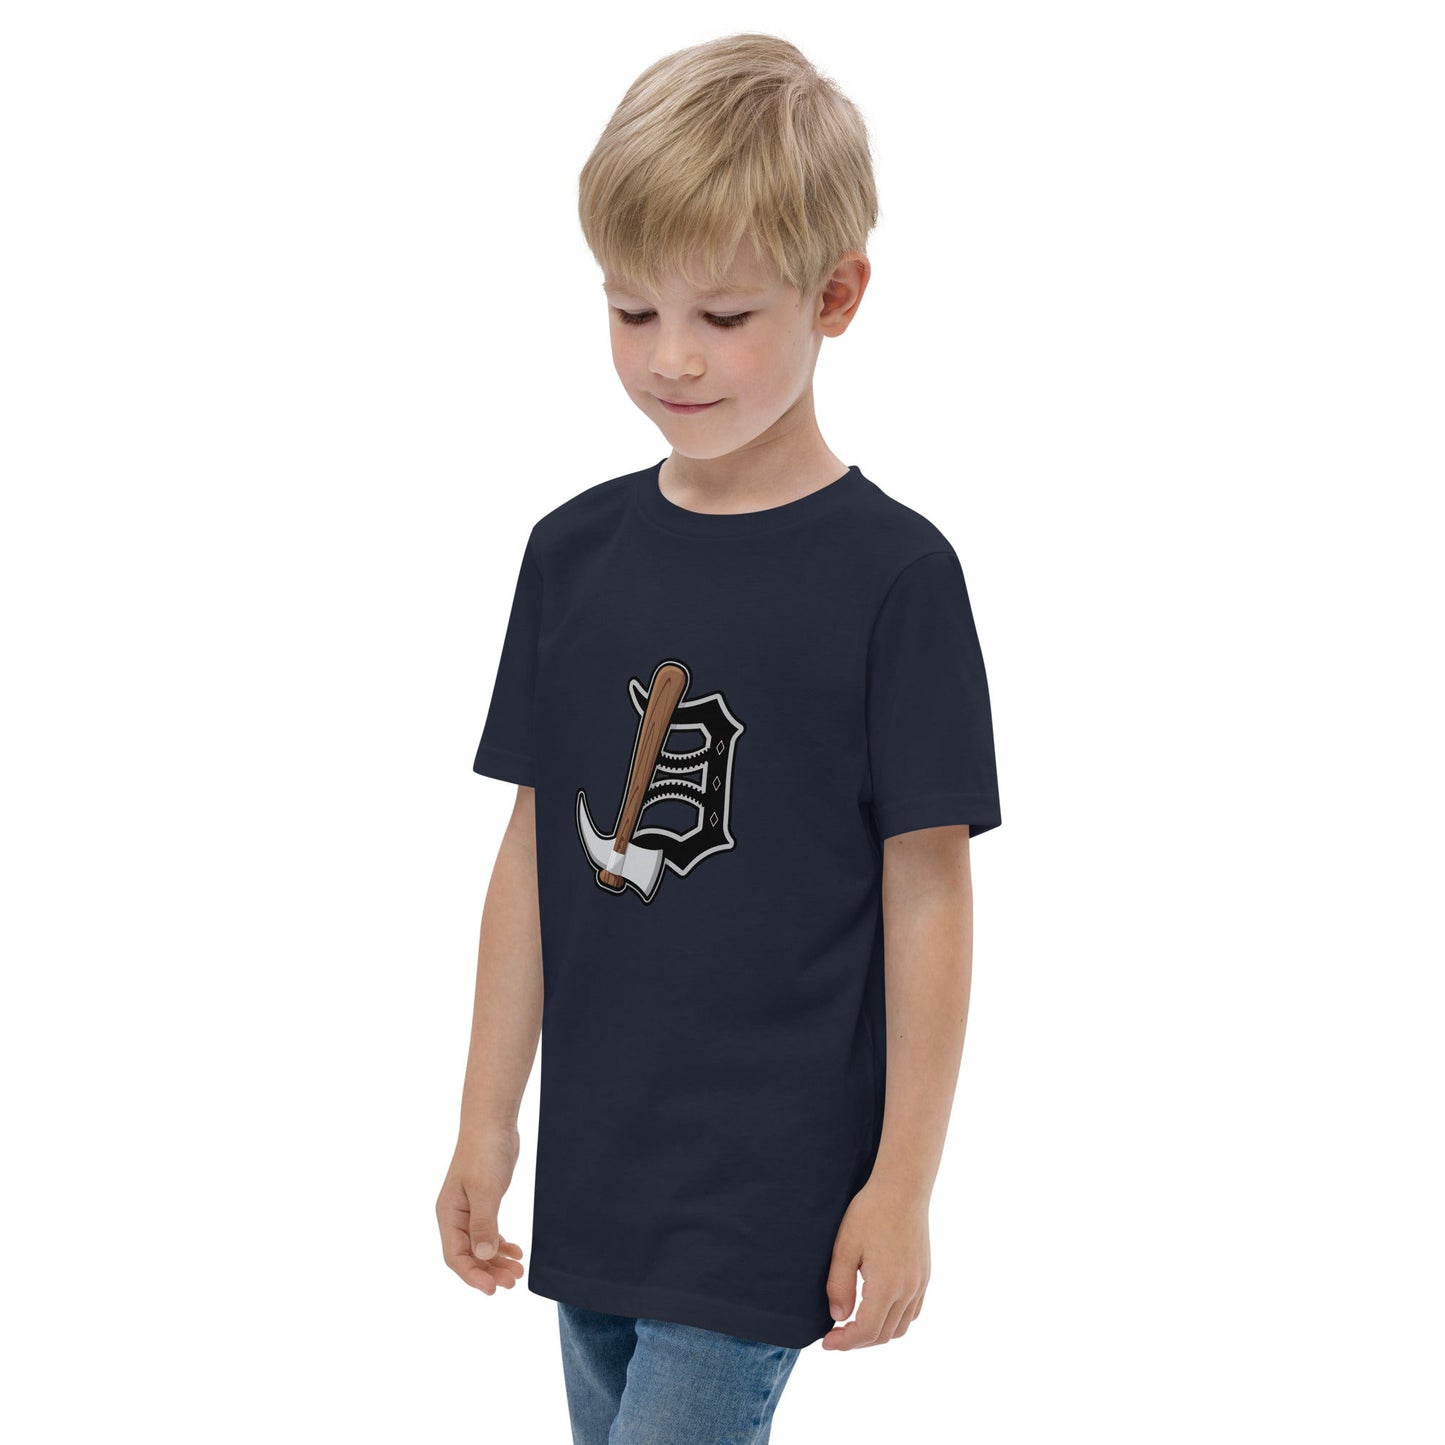 Diamond Jaxxx Youth jersey t-shirt Bat Club USA